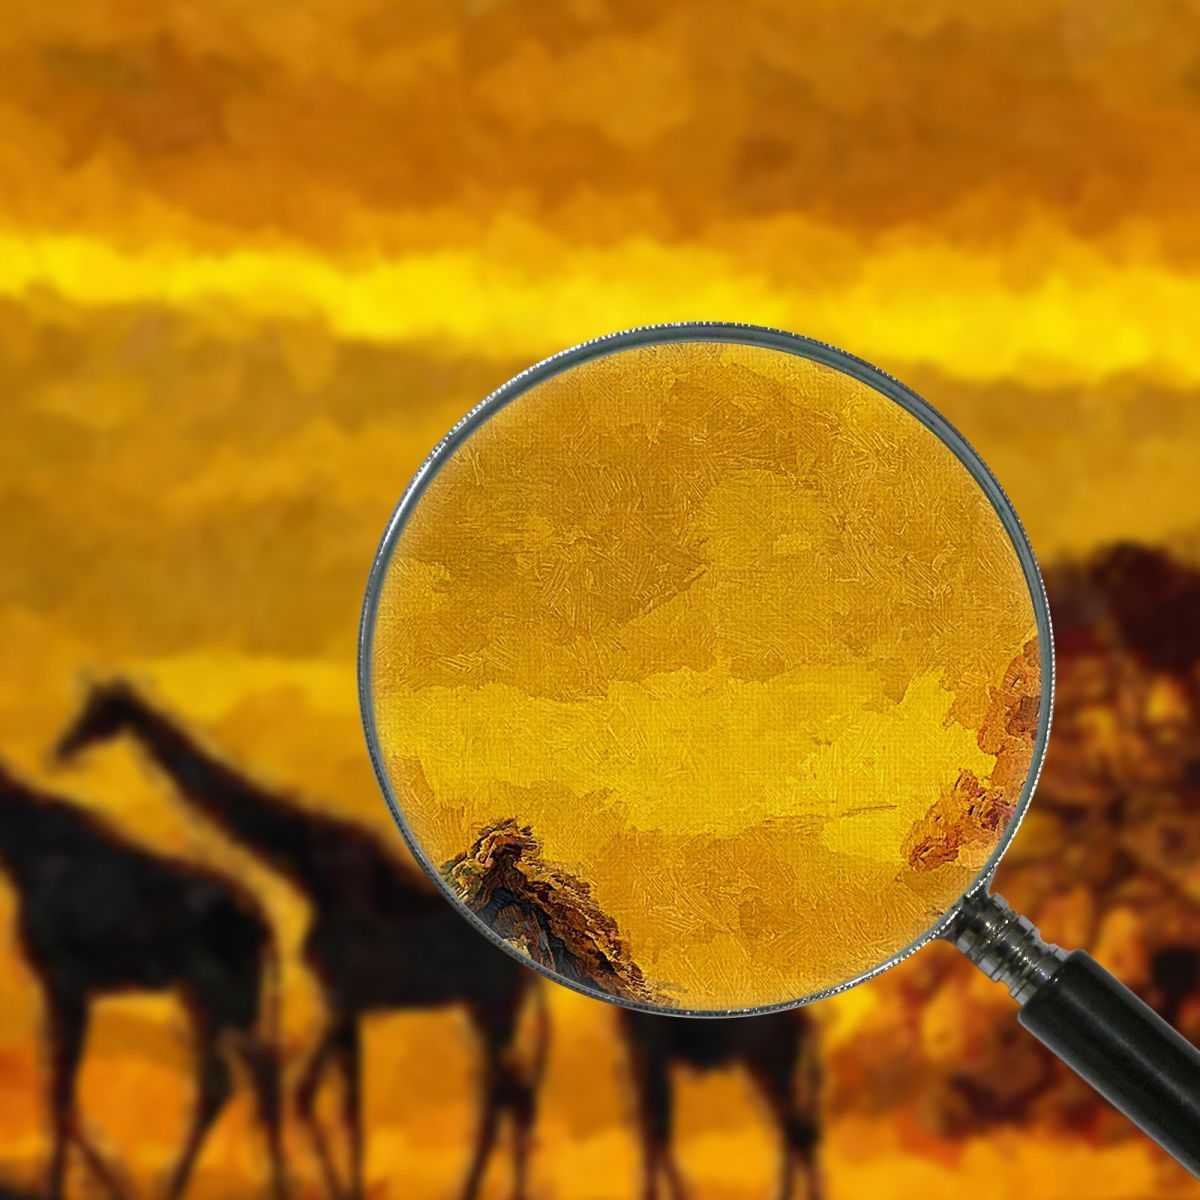 ❤️️ Quadro etnico giraffe al tramonto quadro africano stampa su tela afr8